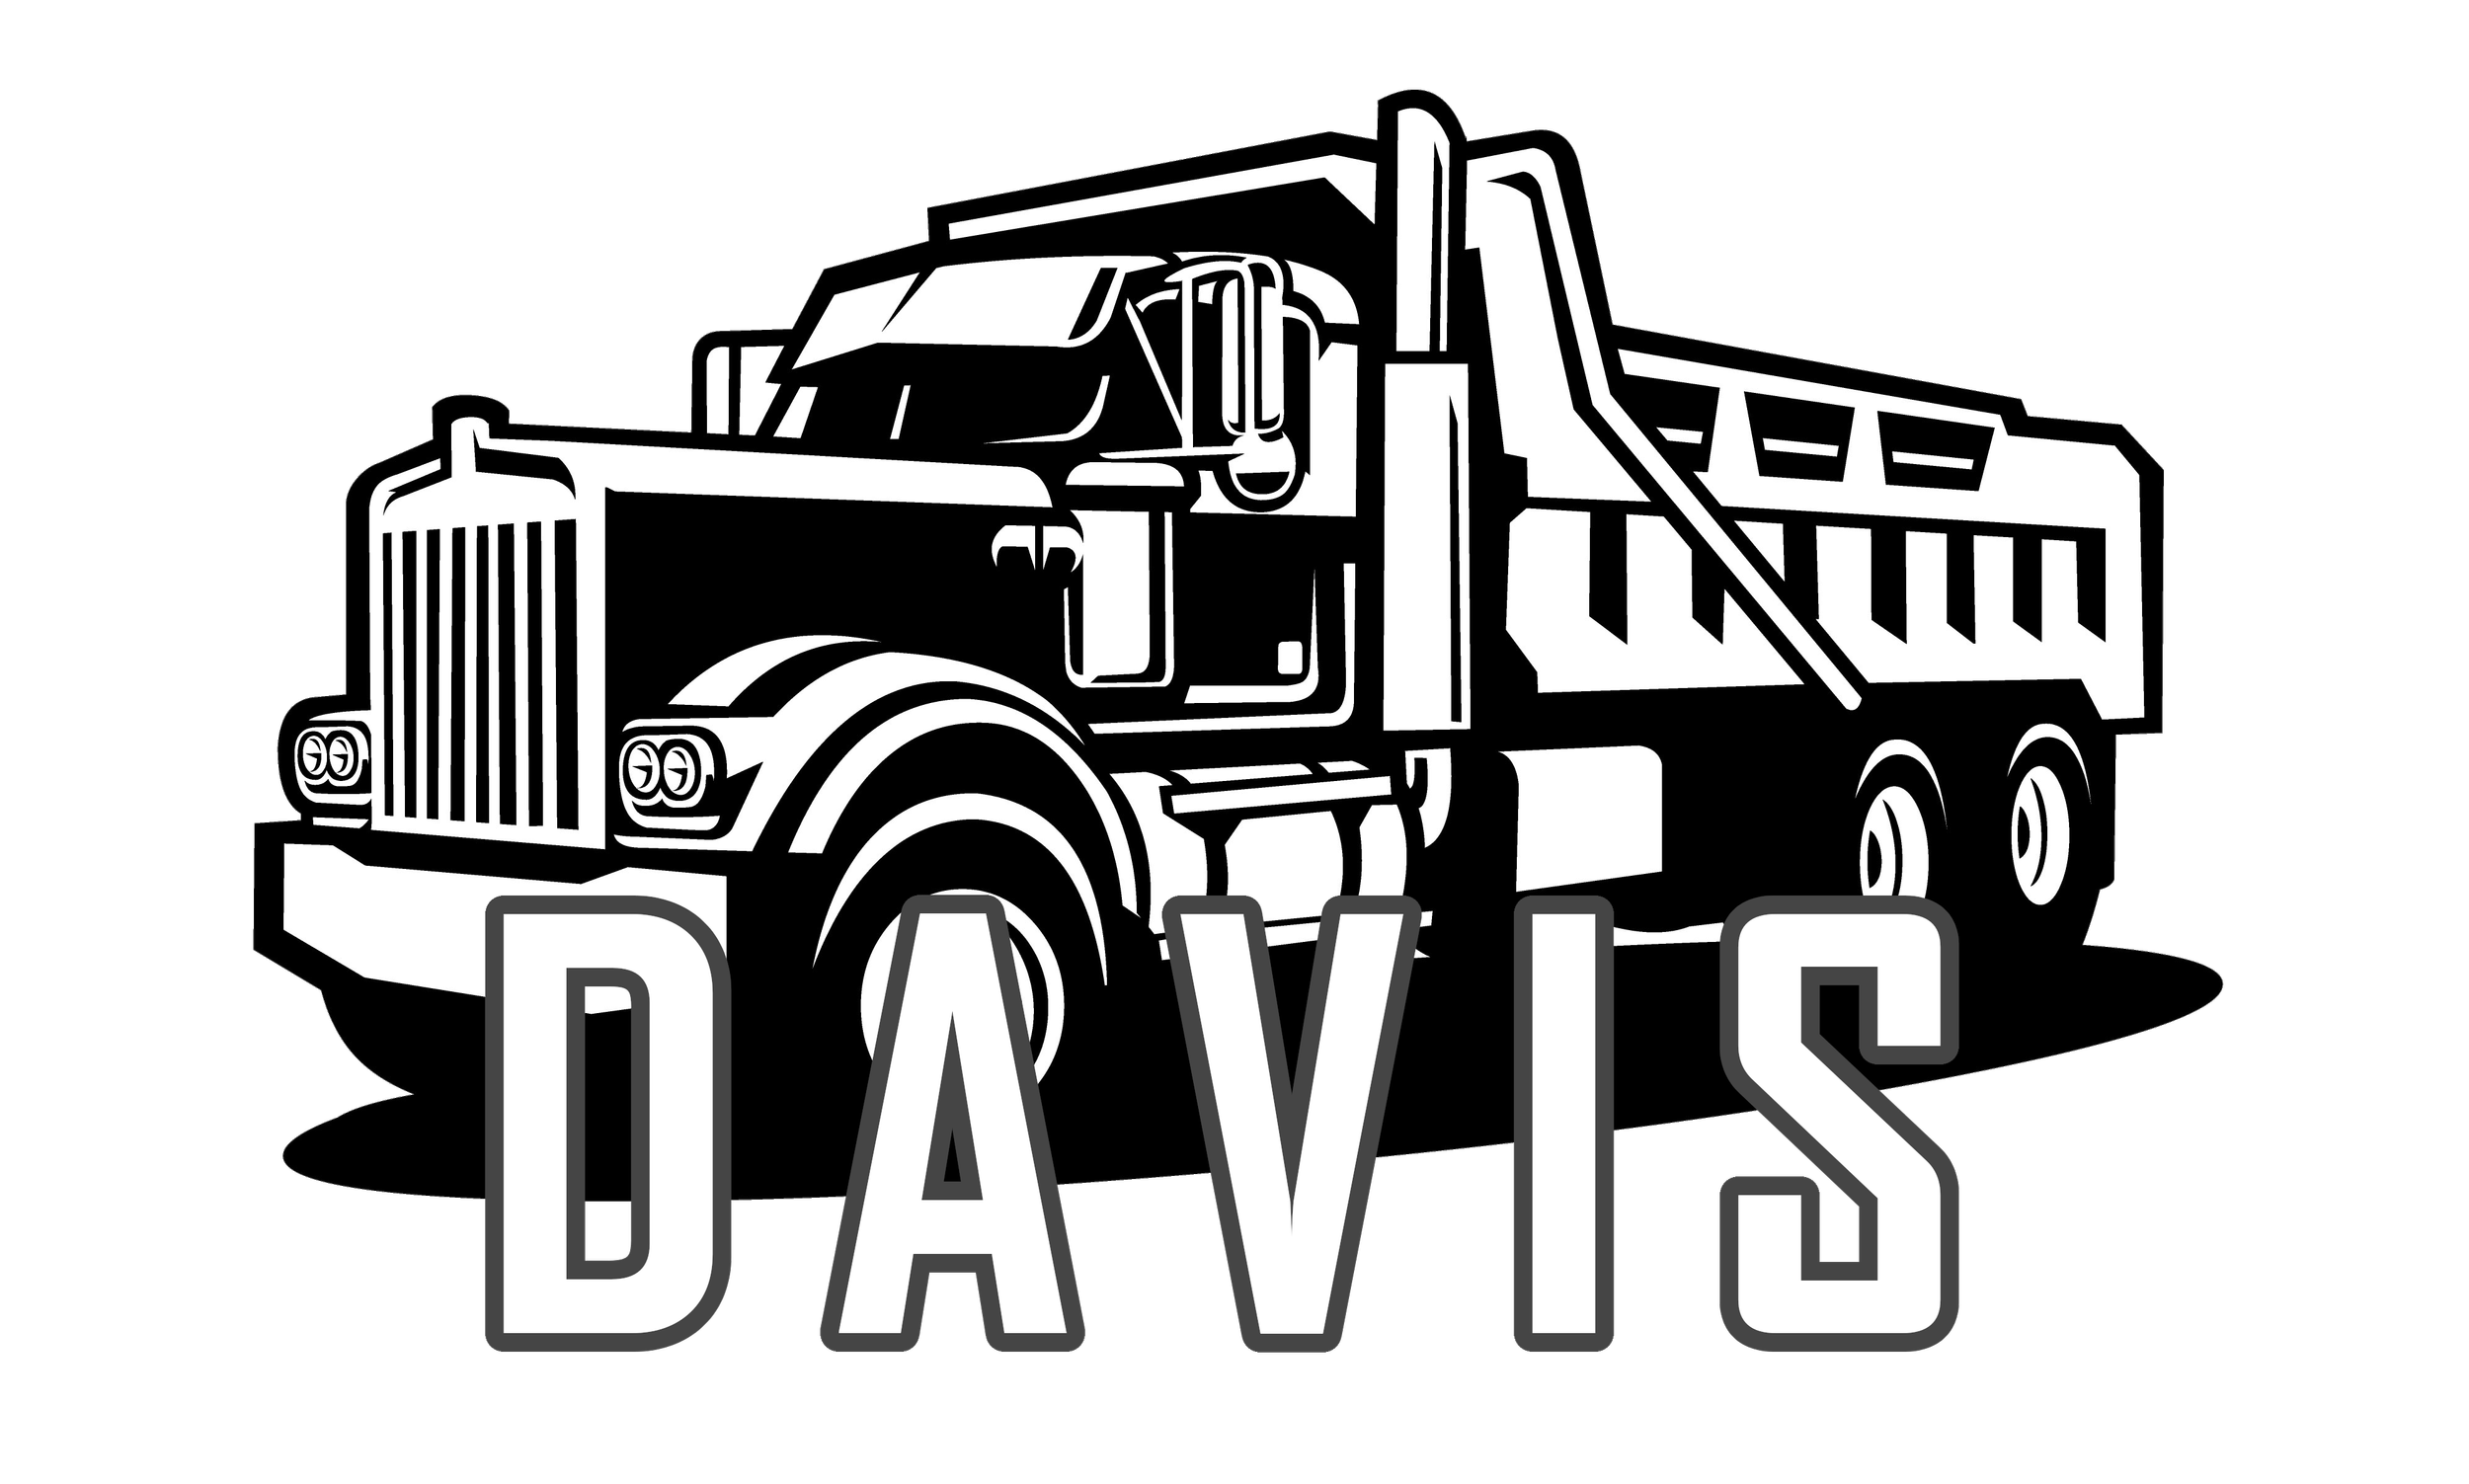 Davis Trucking